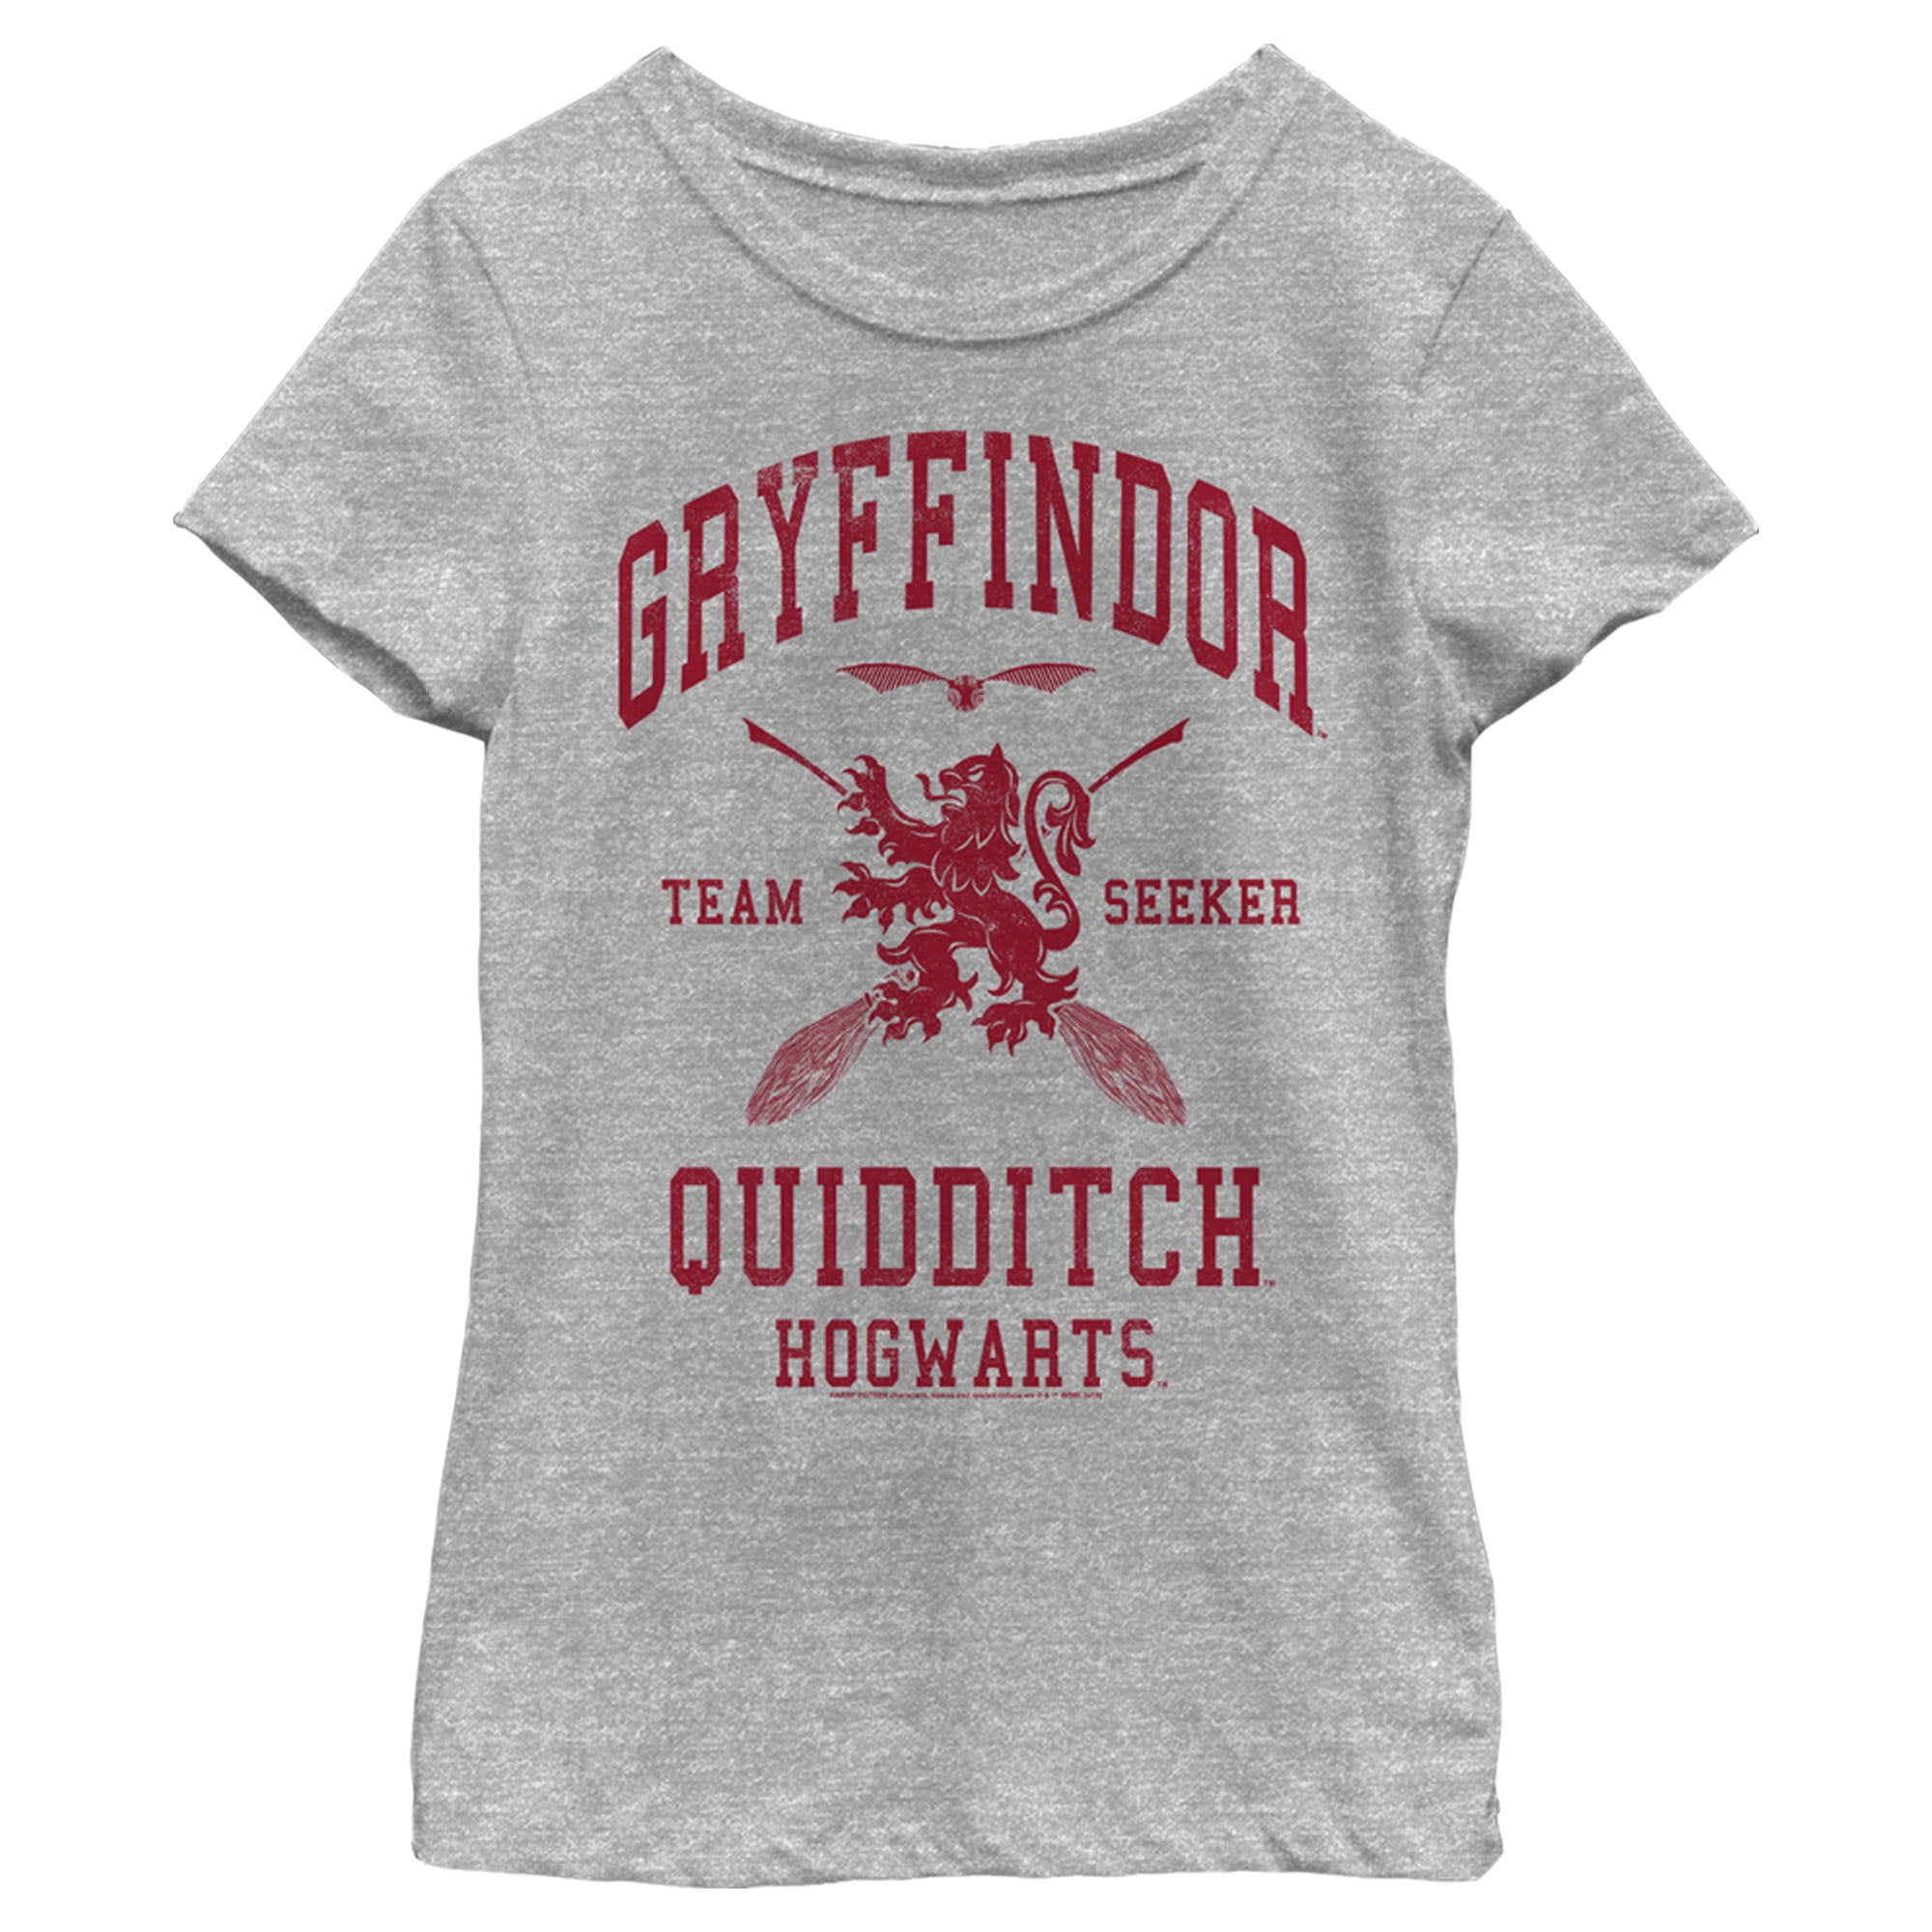 Harry Potter T-Shirt Quidditch Team Captain Girl's Raglan Kids Grey Top 